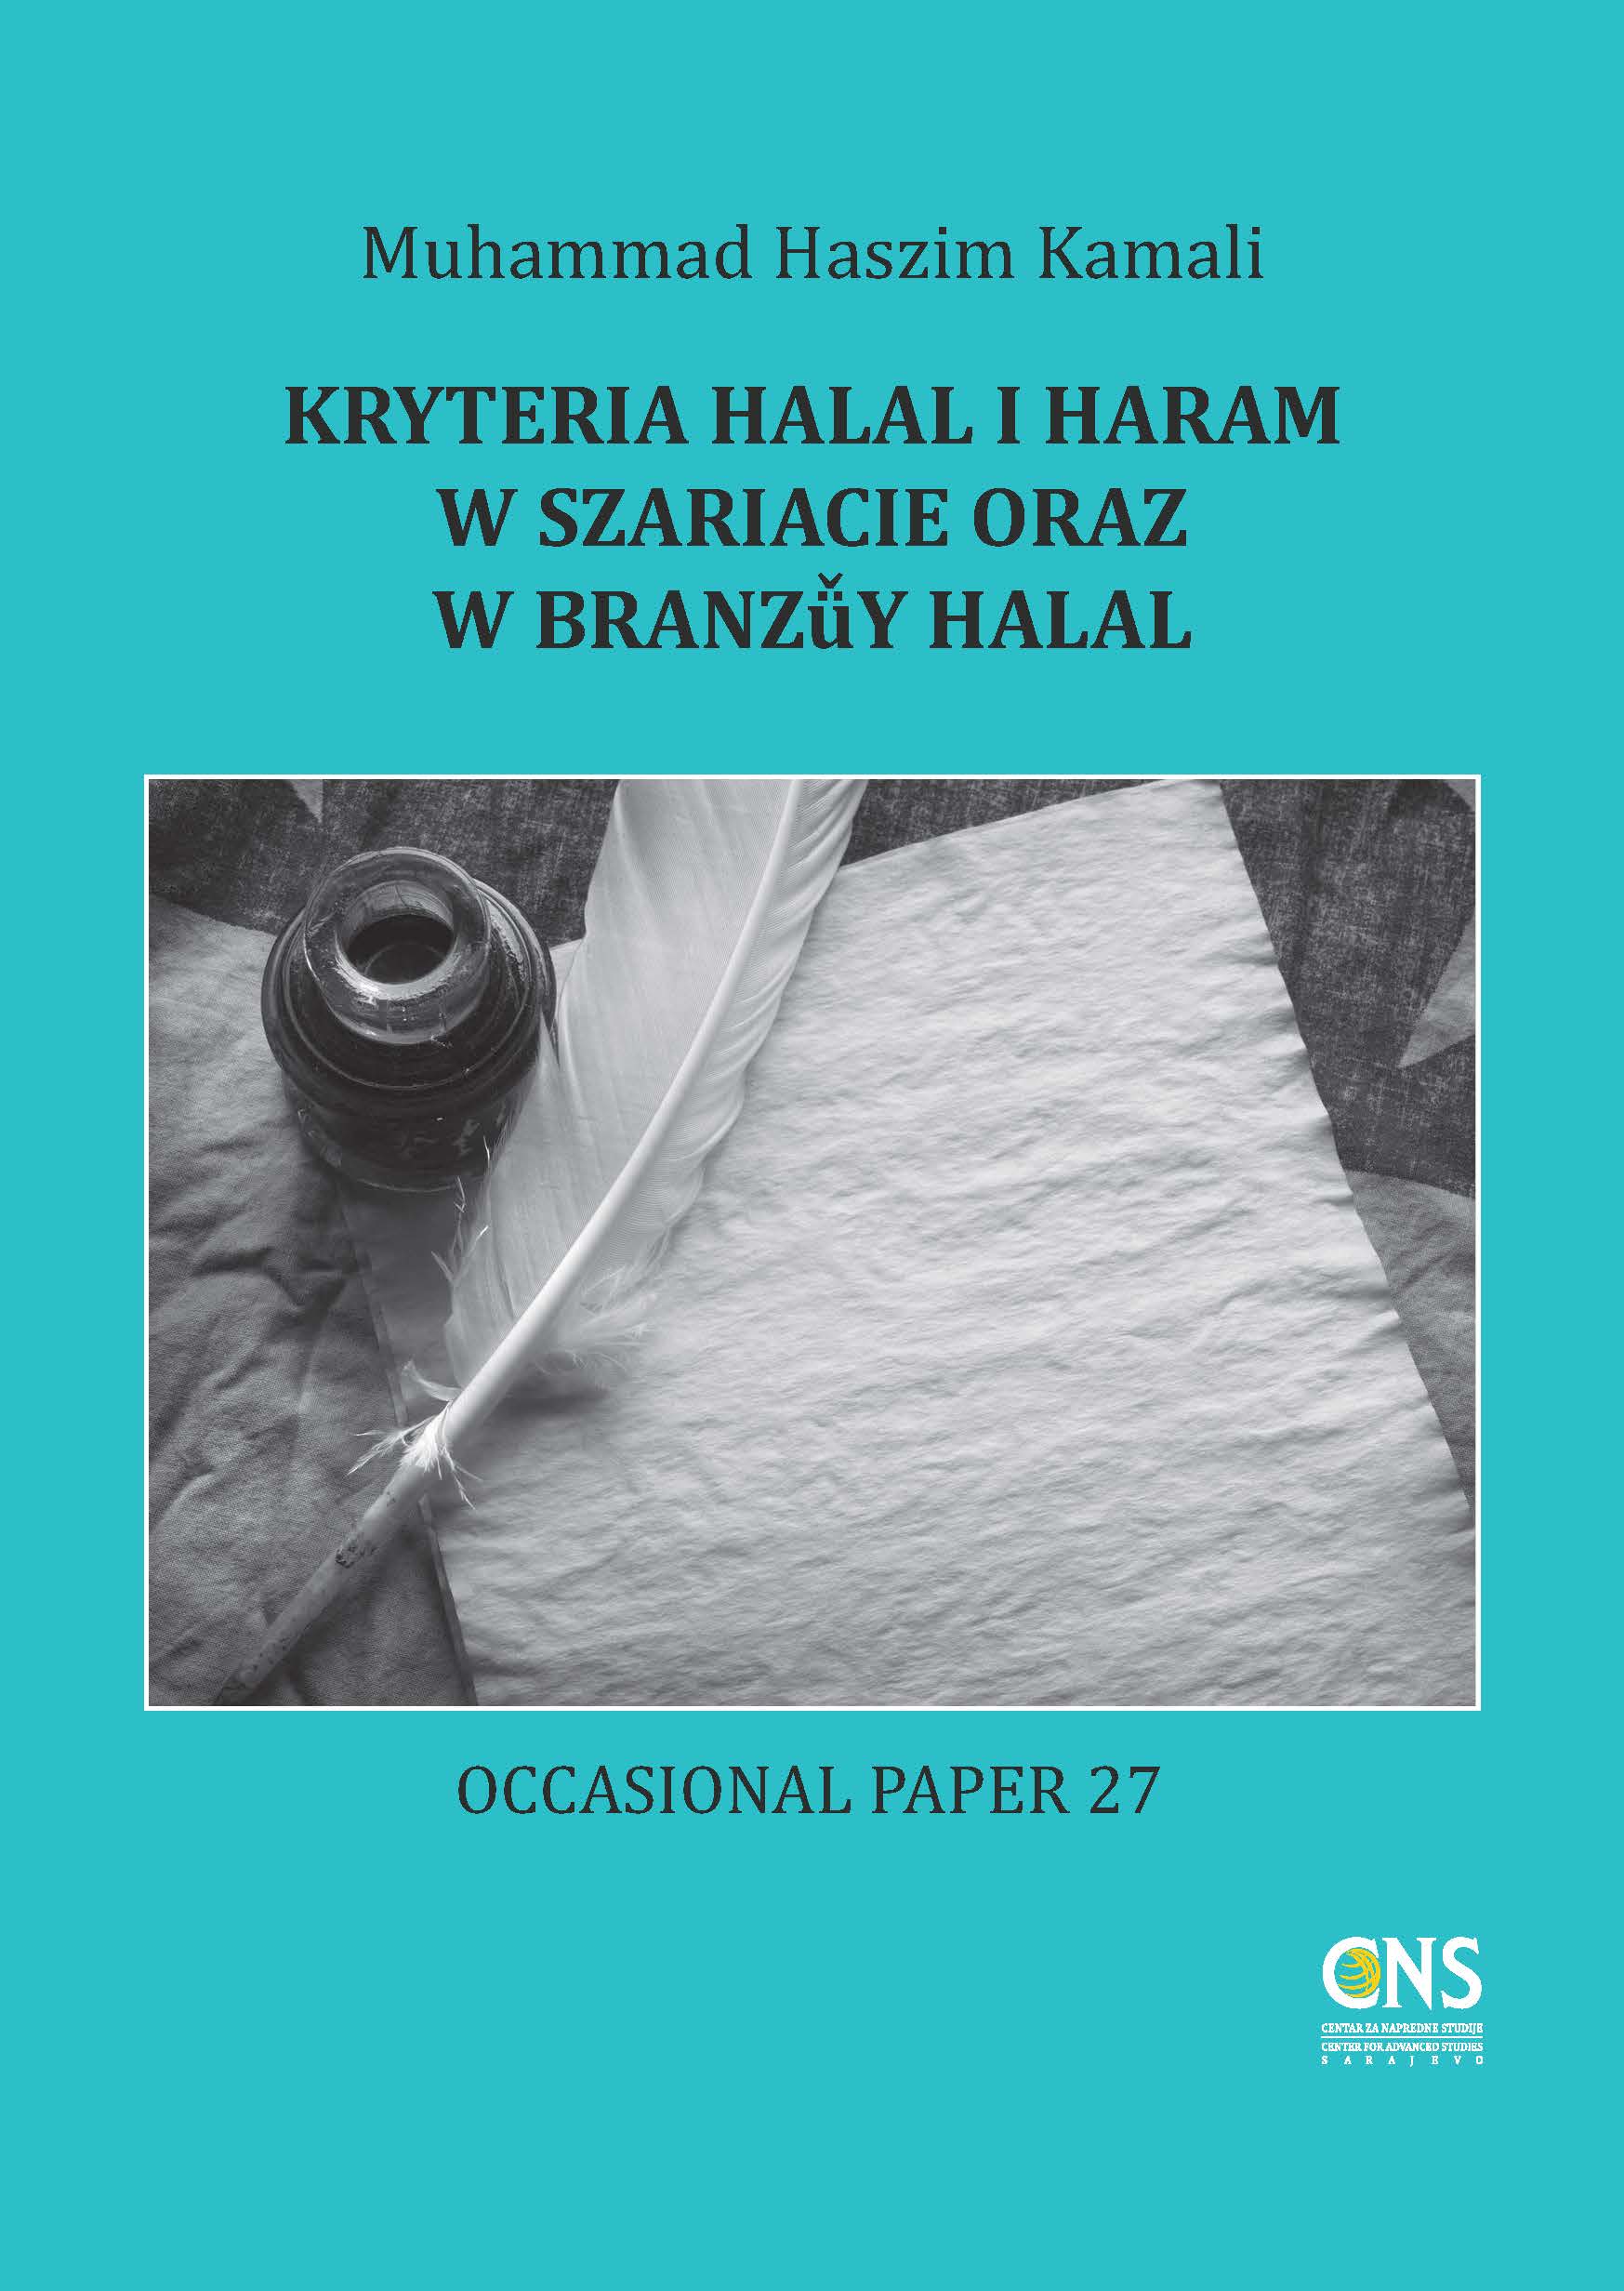 Polish: Kryteria halal i haram w szariacie oraz w branży halal (The Parameters of Halal and Haram in Shariah and the Halal Industry)